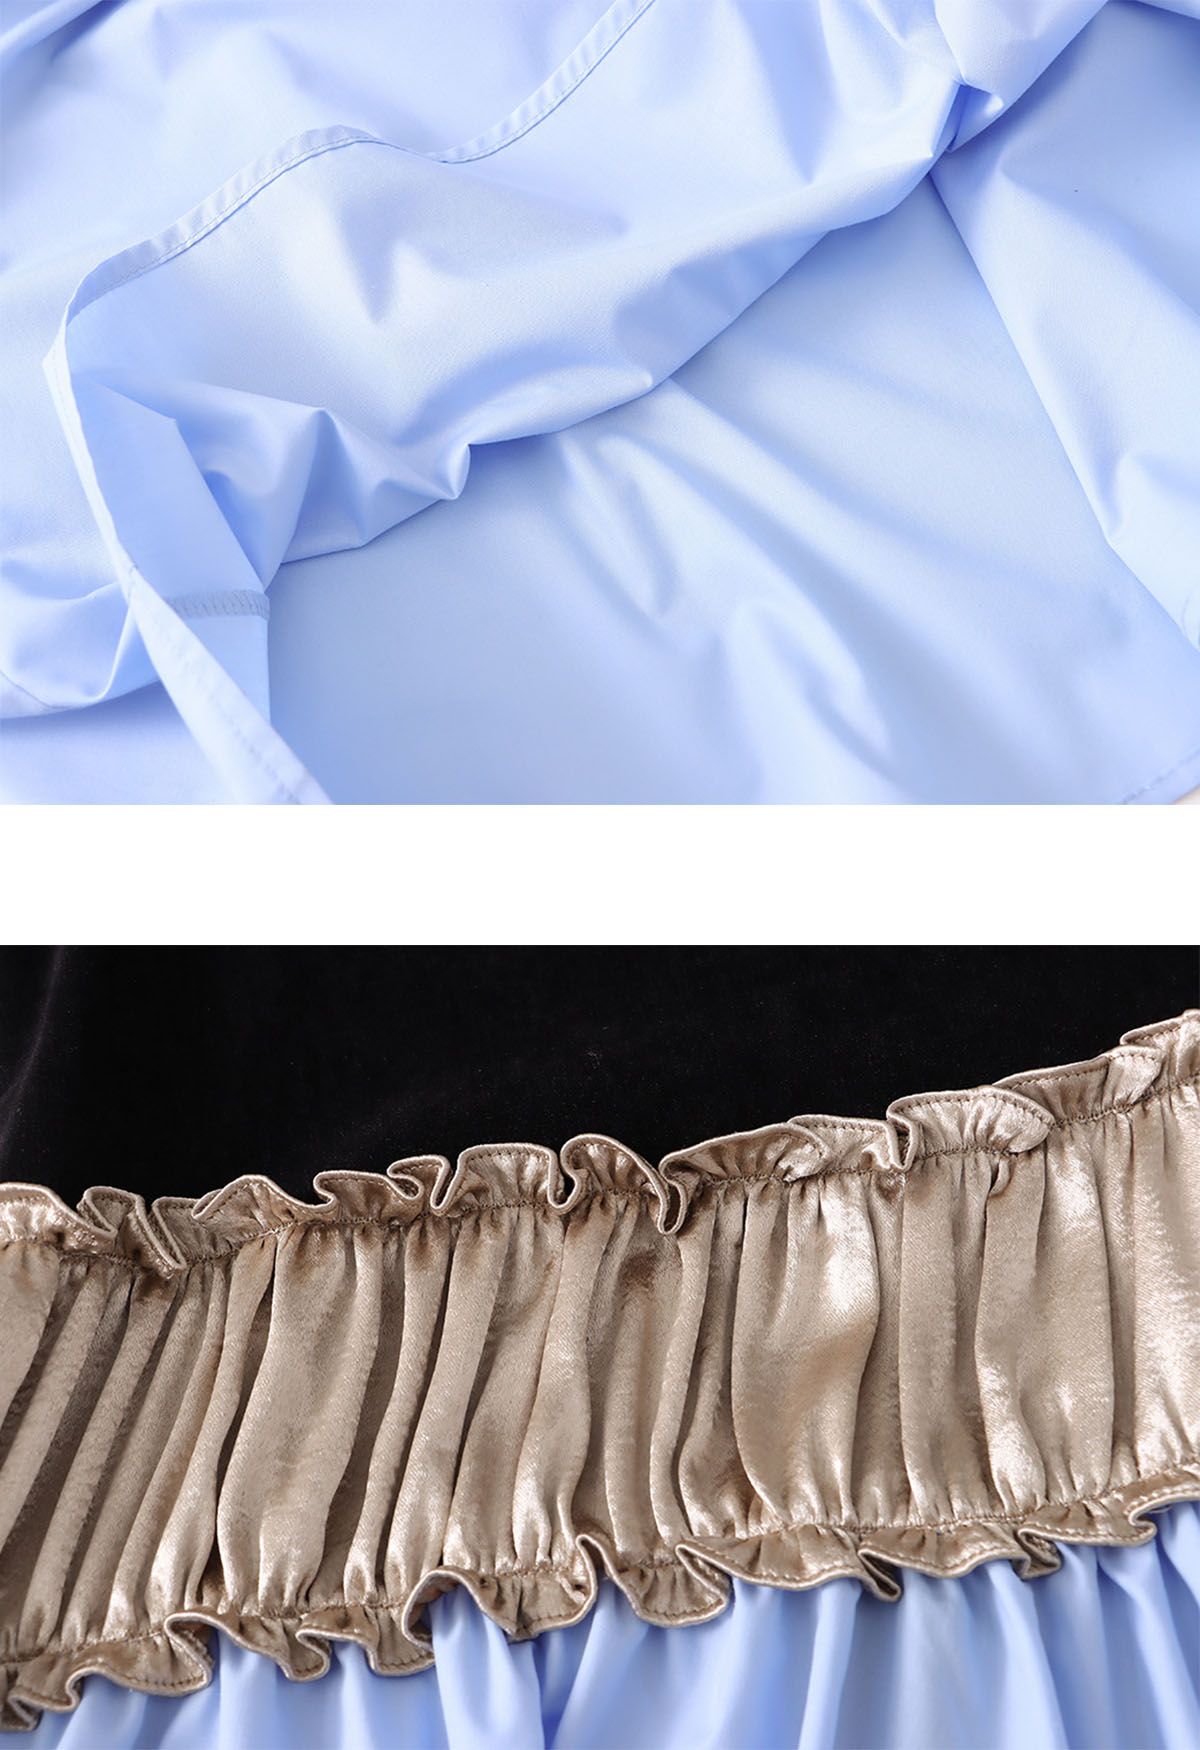 Contrast Panelled Sleeveless Dress